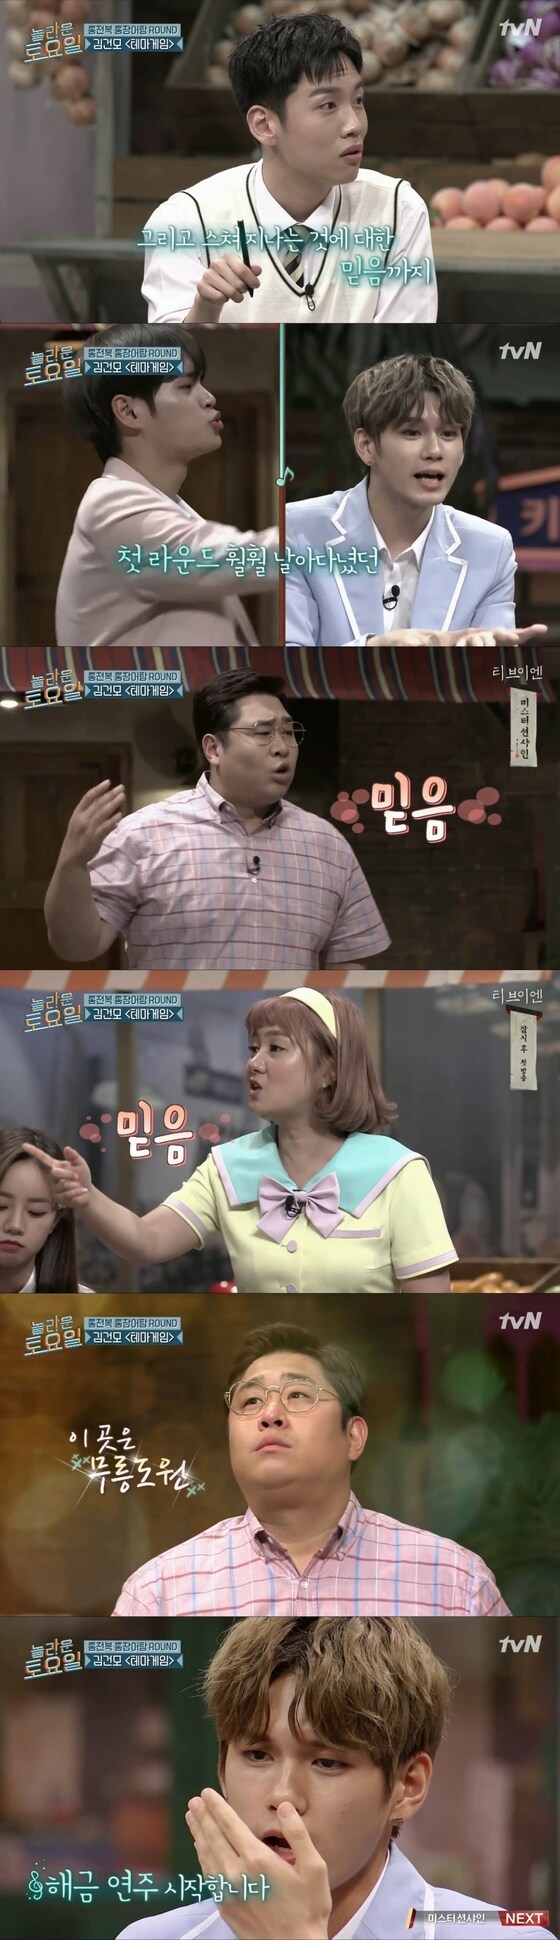 tvN '놀라운 토요일' 캡처© News1